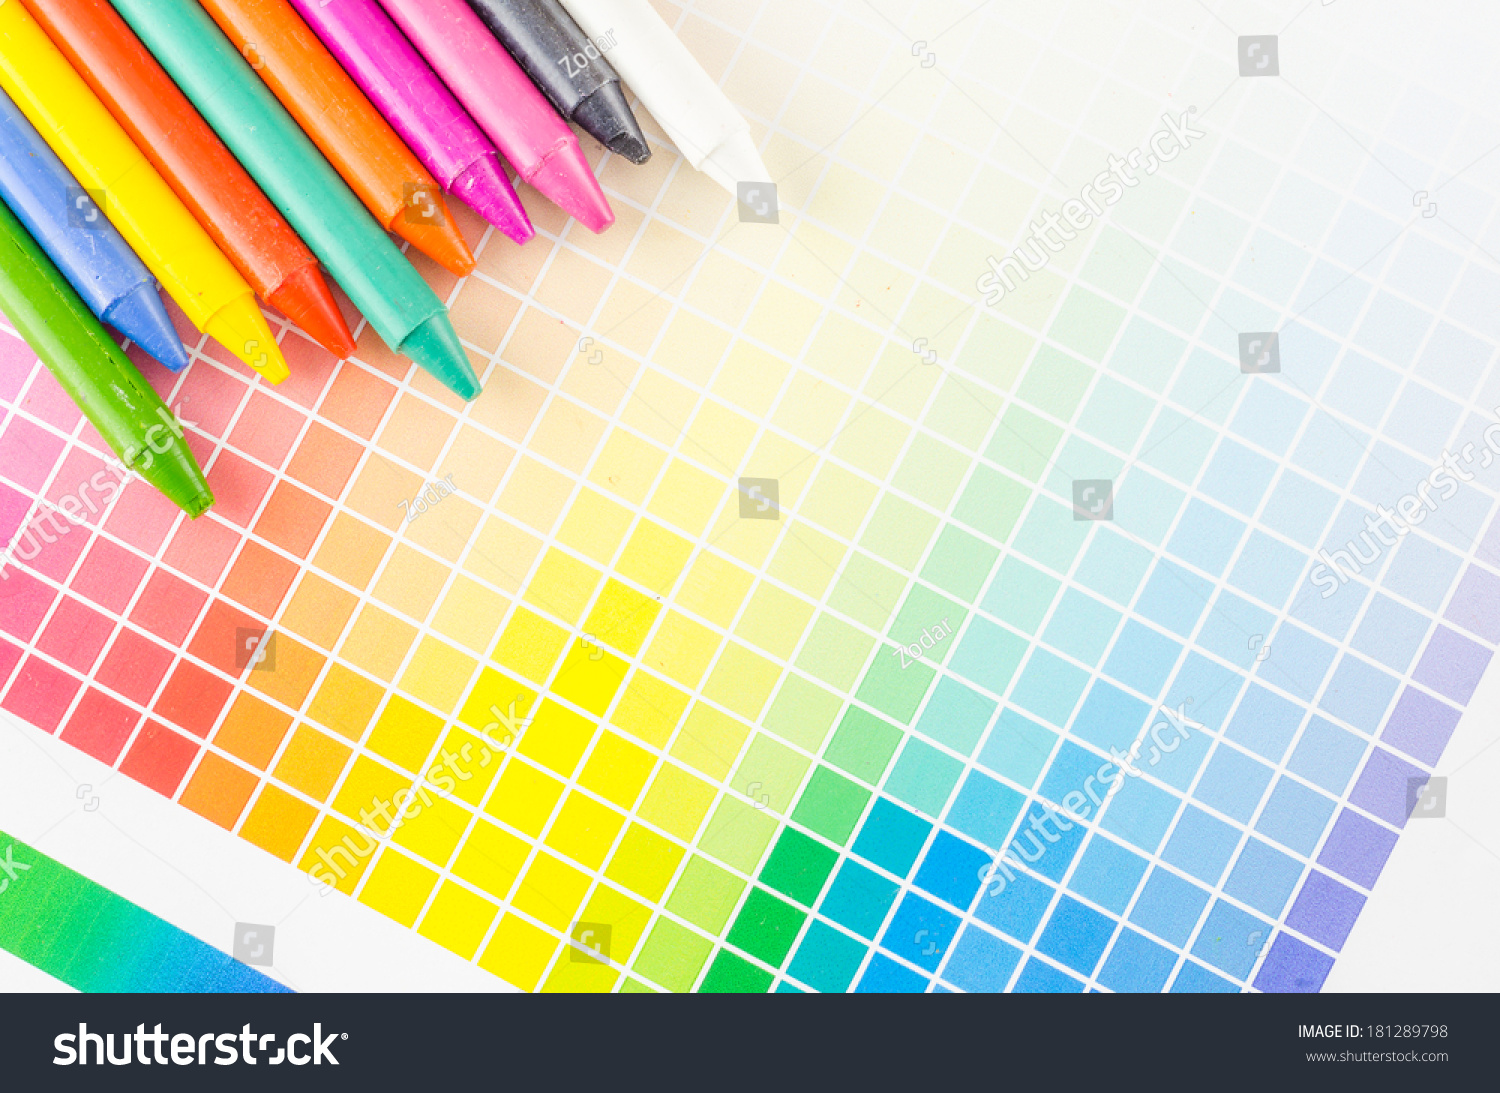 Crayon Color Chart